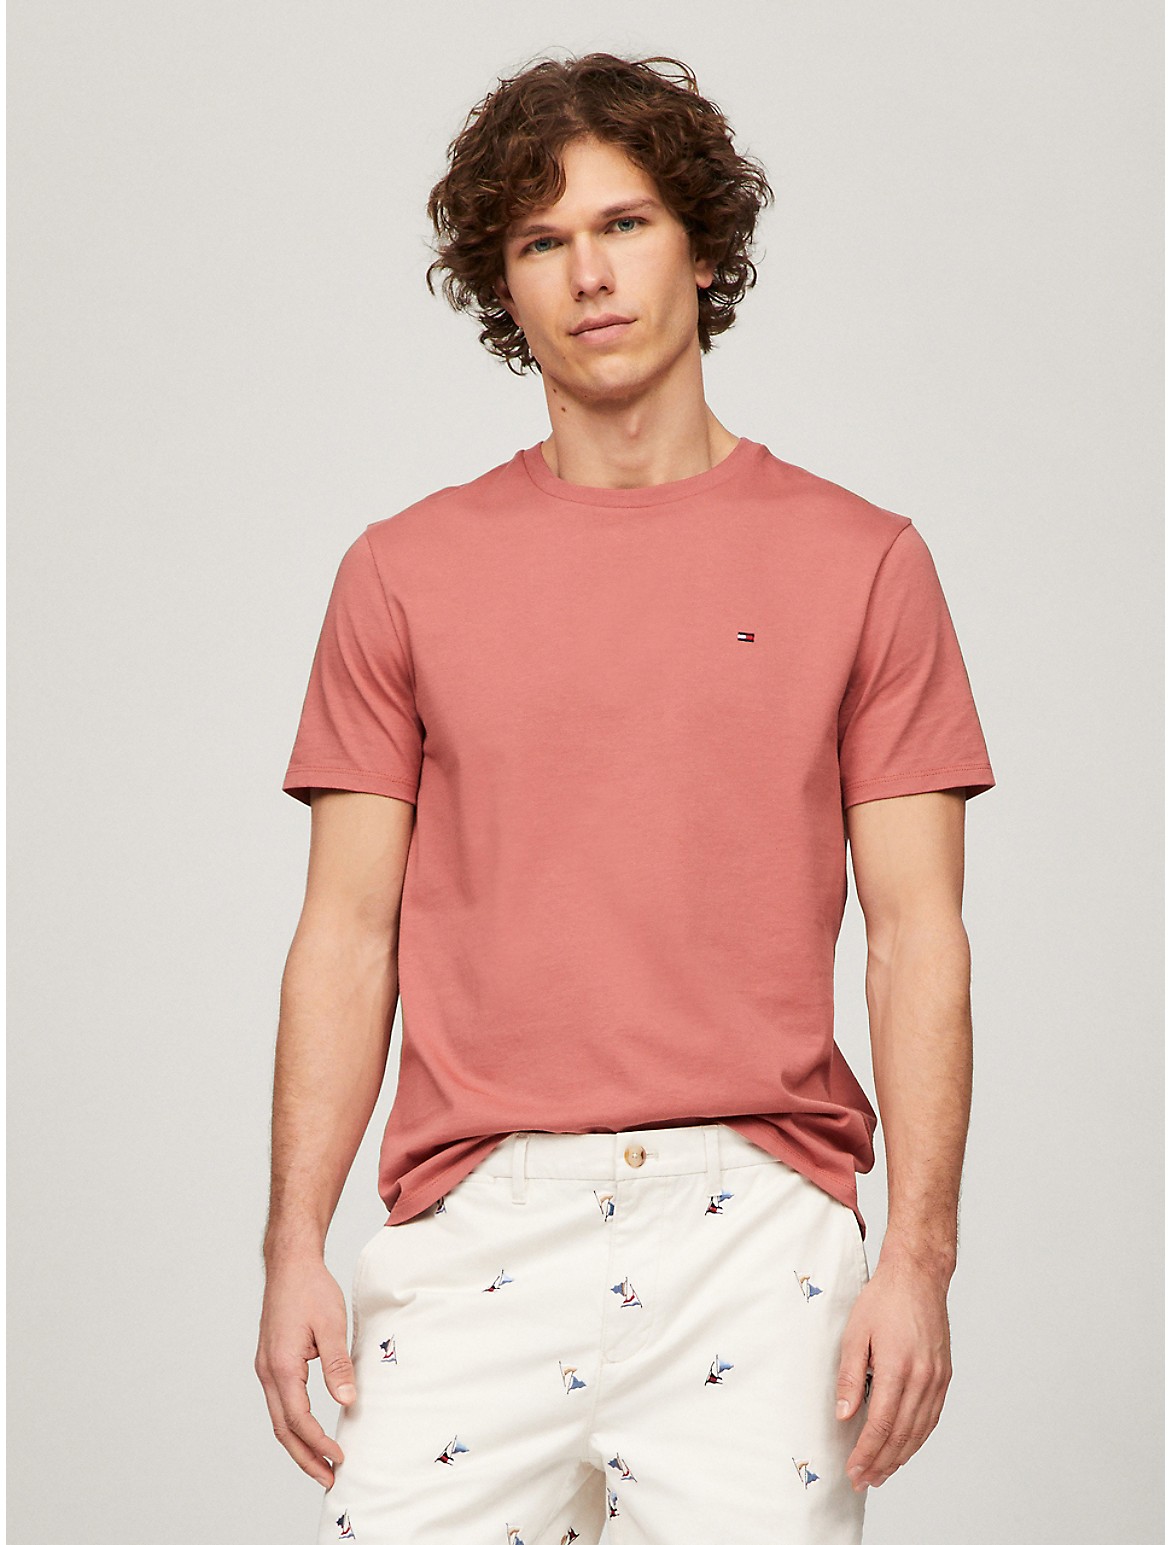 Tommy Hilfiger Men's Everyday Solid T-Shirt